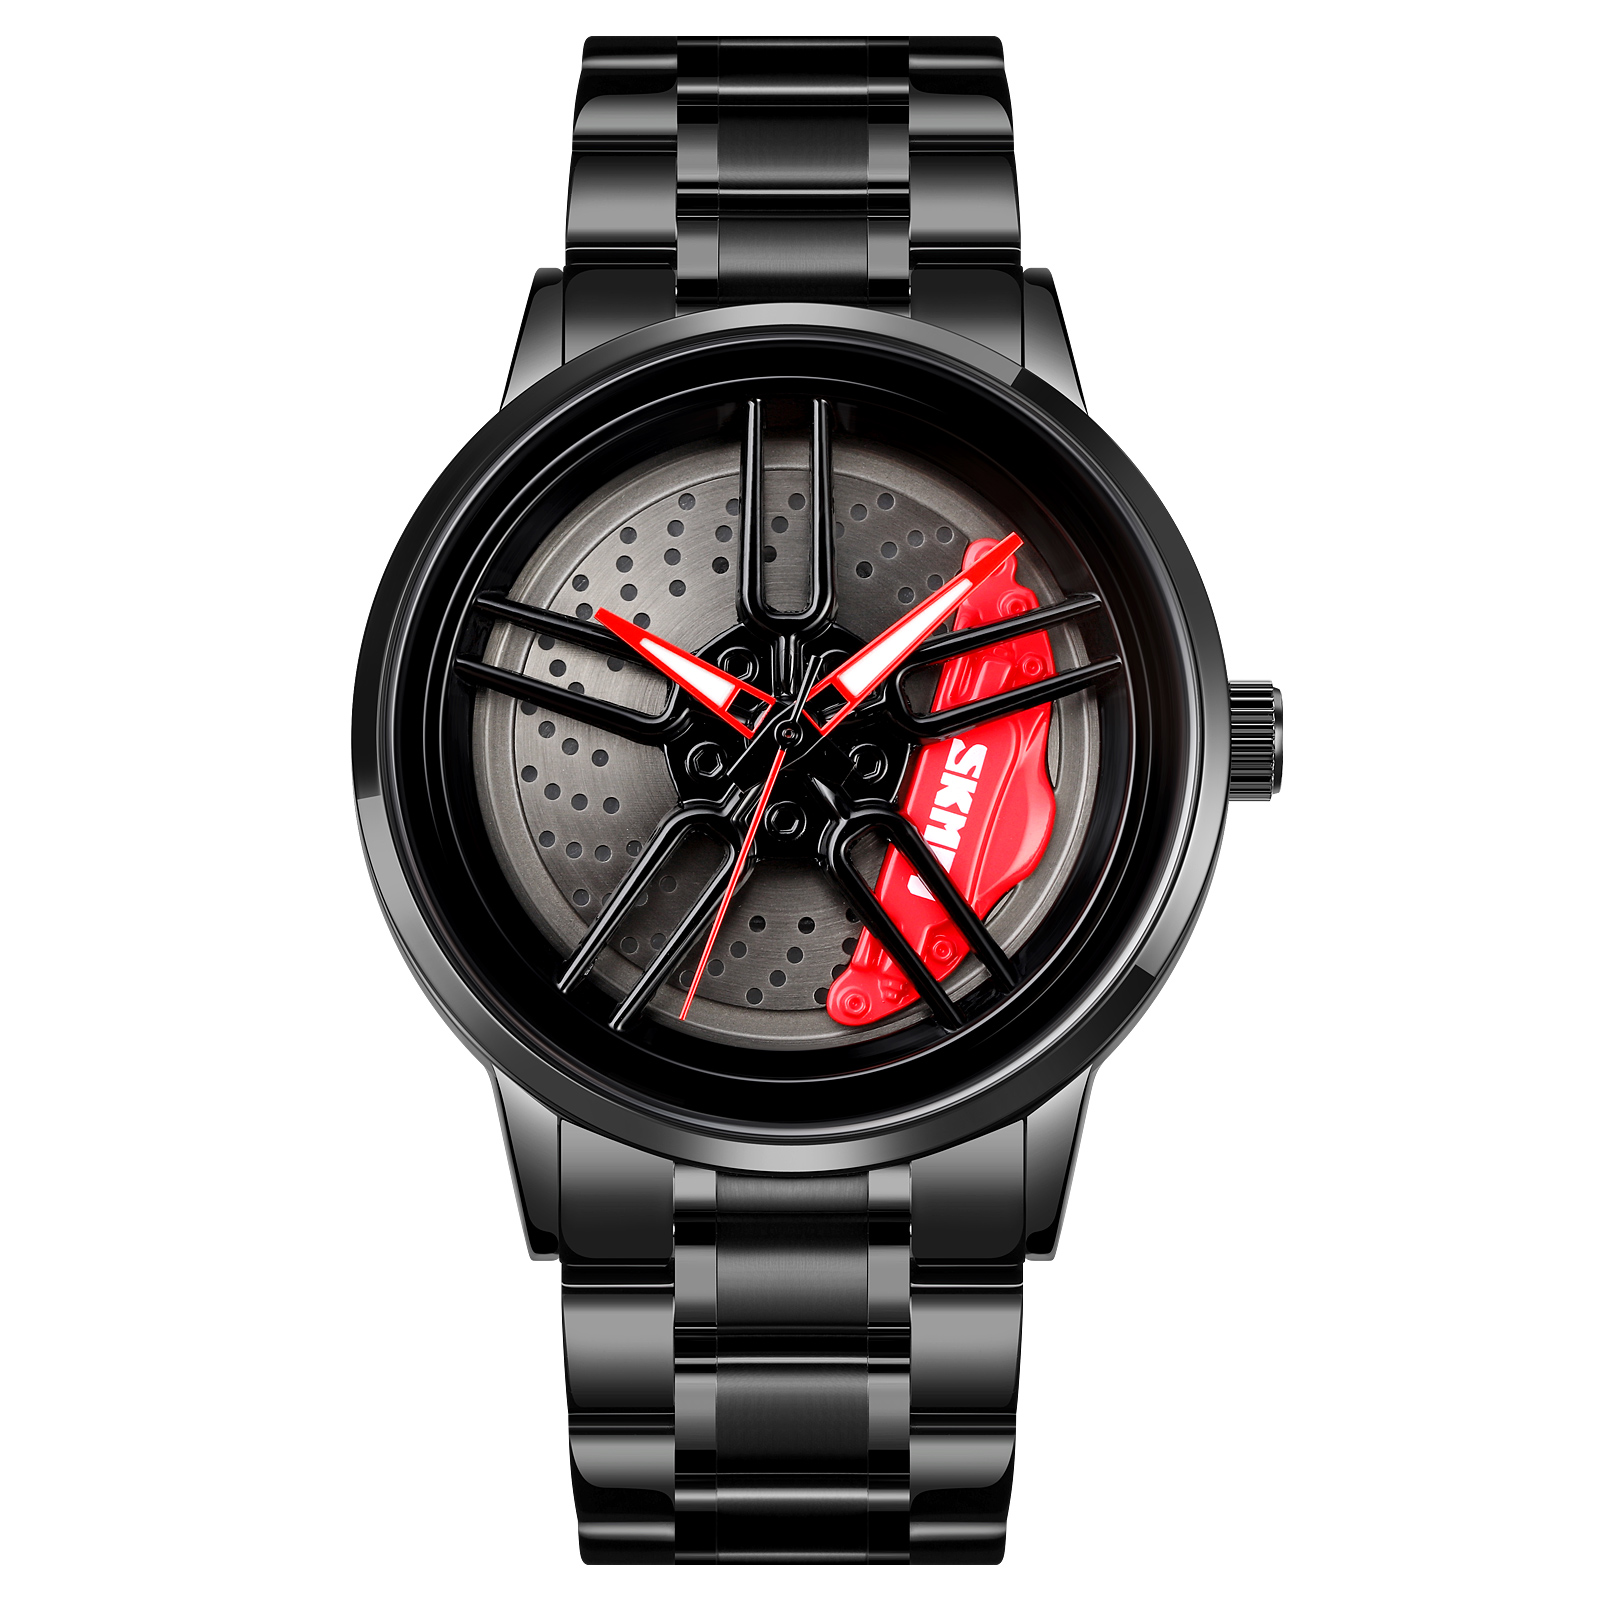 Rim watch-Skmei Watch Manufacture Co.,Ltd